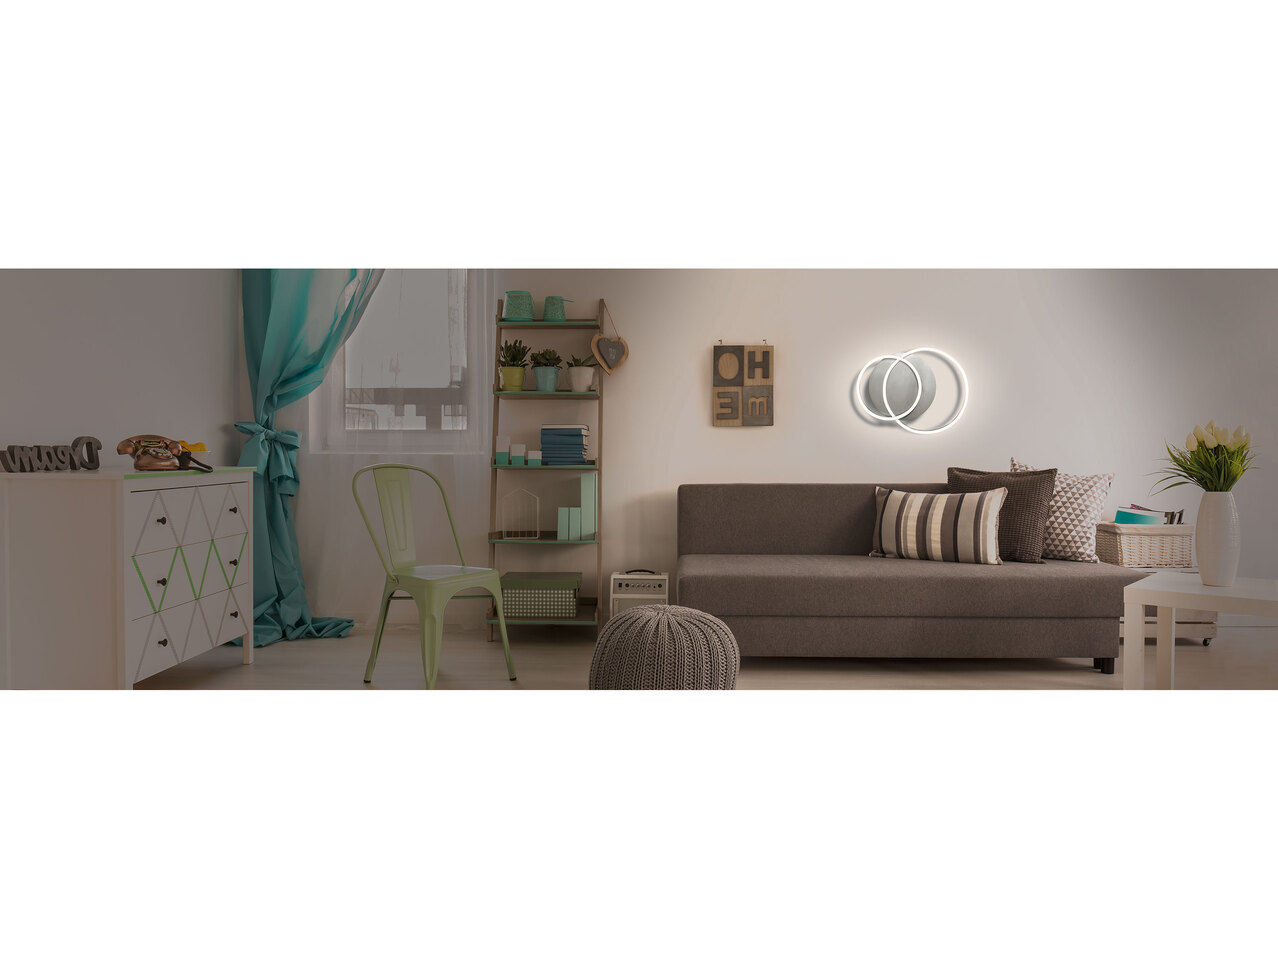 LIVARNO HOME® Lampa LED , cena 129 PLN 

- do montażu na ścianie lub suficie
- ...